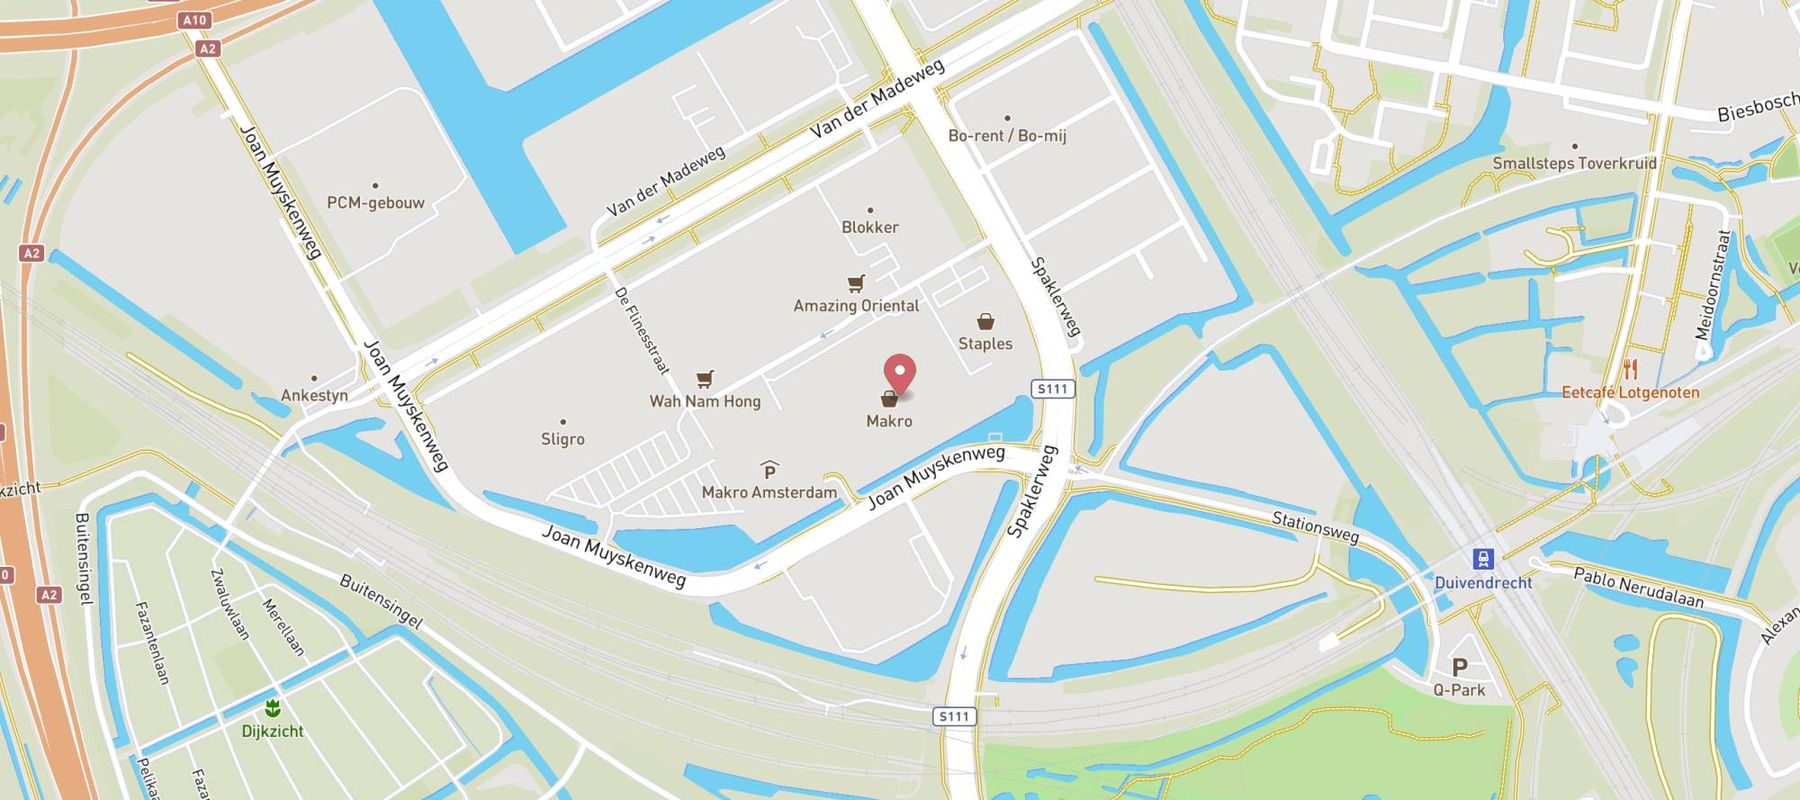 Makro Amsterdam map